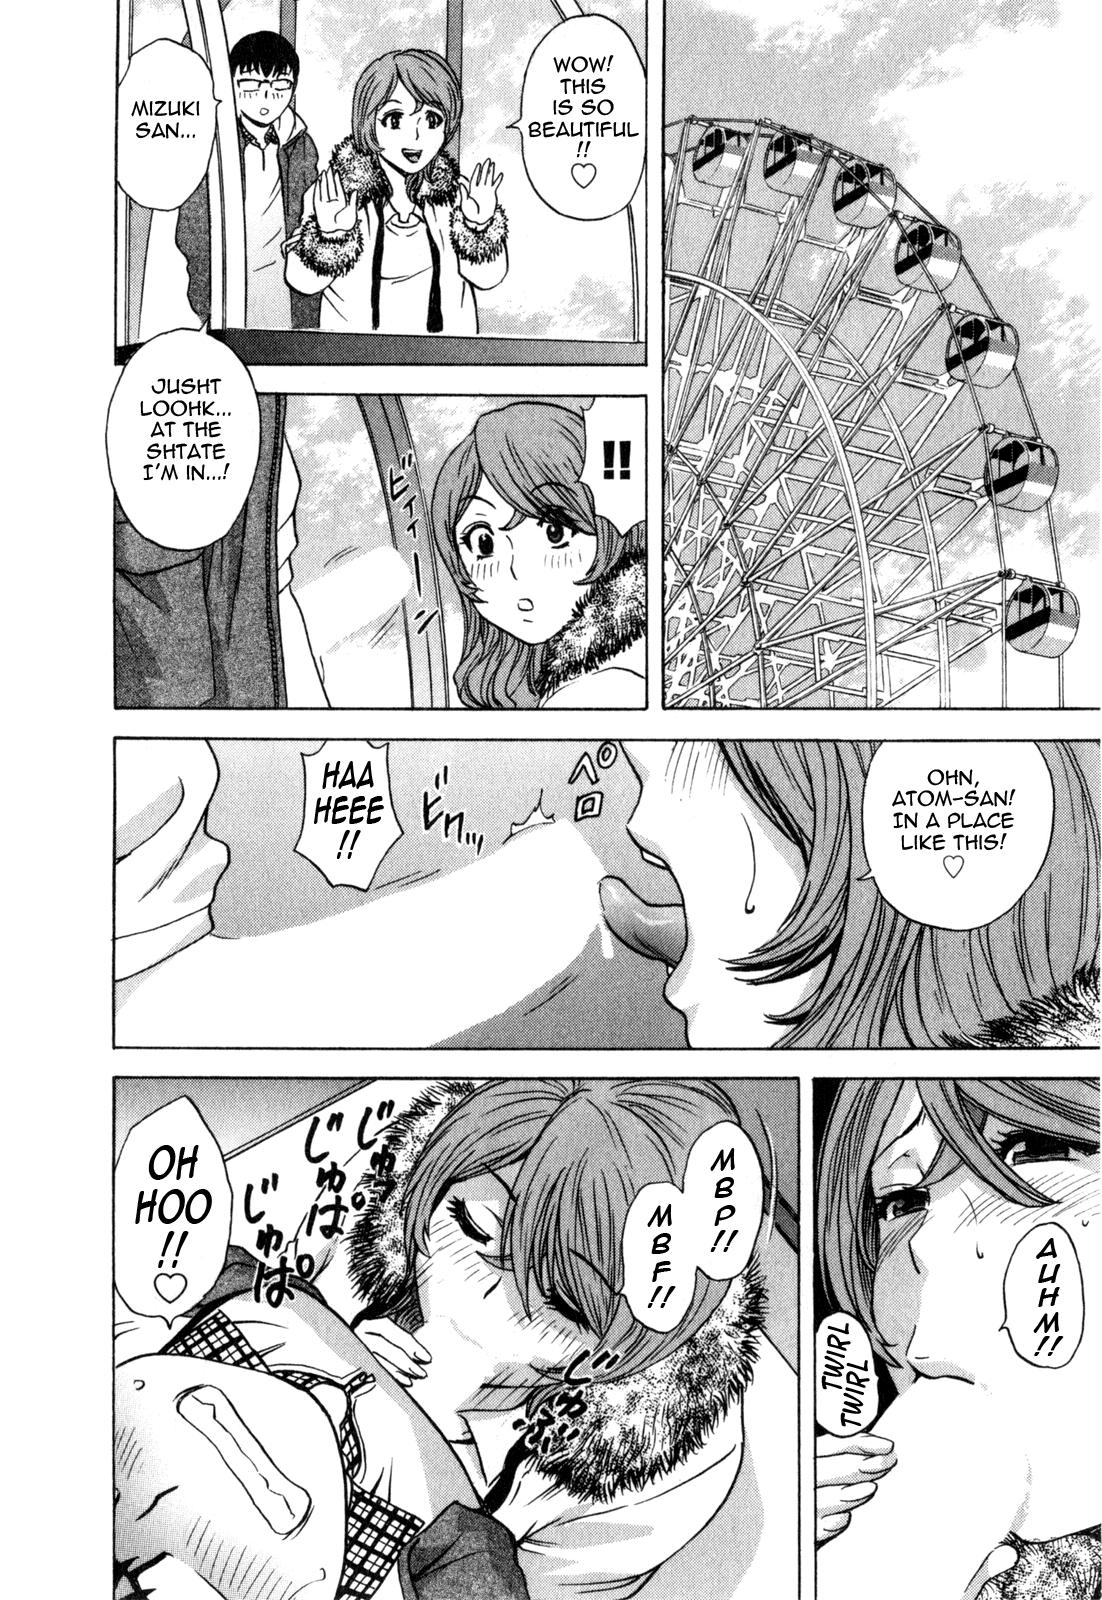 [Hidemaru] Life with Married Women Just Like a Manga 3 - Ch. 1-7 [English] {Tadanohito} 34